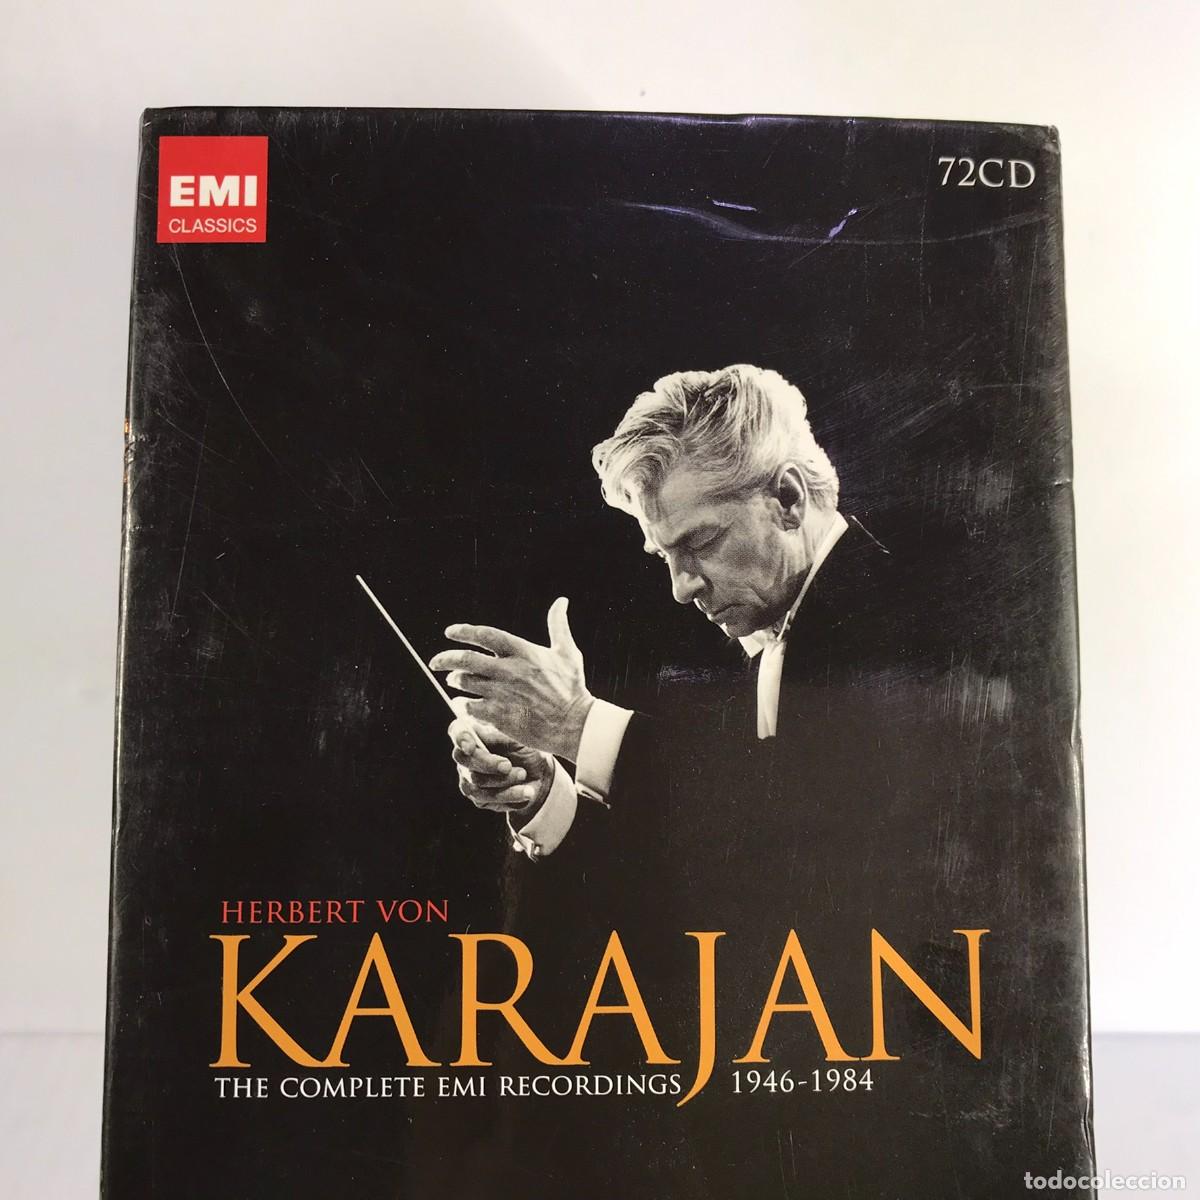 Karajan Complete EMI Recordings 1946-1984. Vol. 2 - Opera 